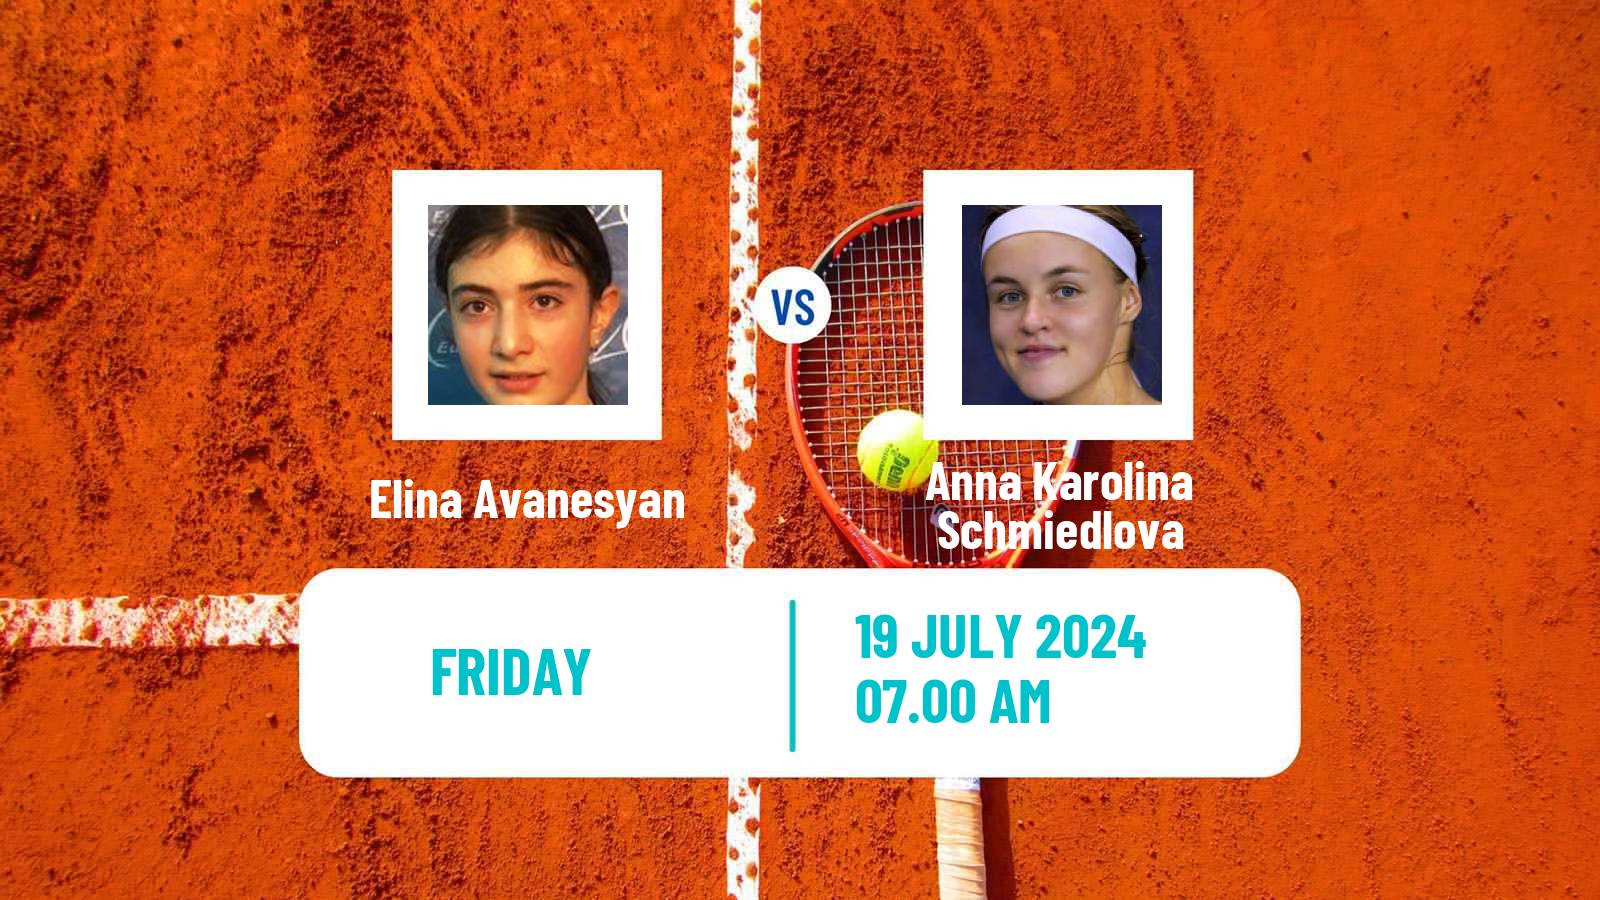 Tennis WTA Budapest Elina Avanesyan - Anna Karolina Schmiedlova